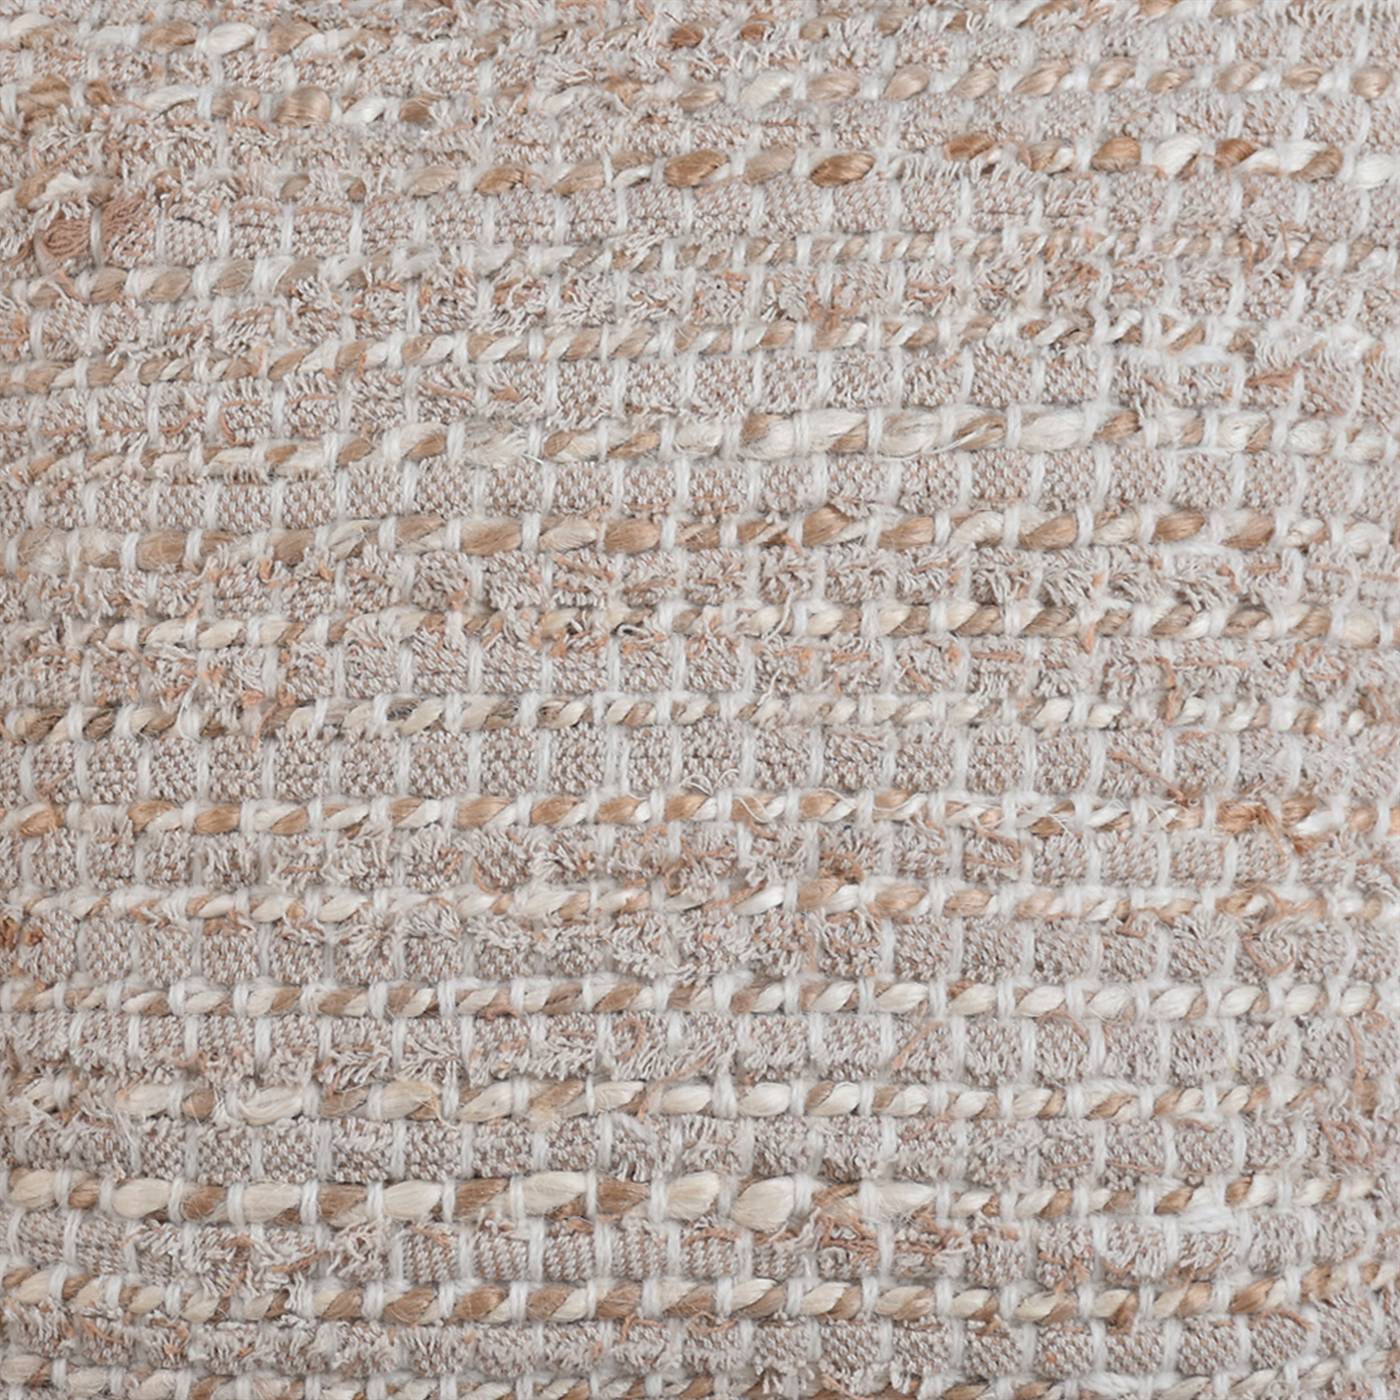 Koenig Cushion, 45x45 cm, Natural Natural White, Multi, Jute, Cotton, Hand Woven, Pitloom, Flat Weave 